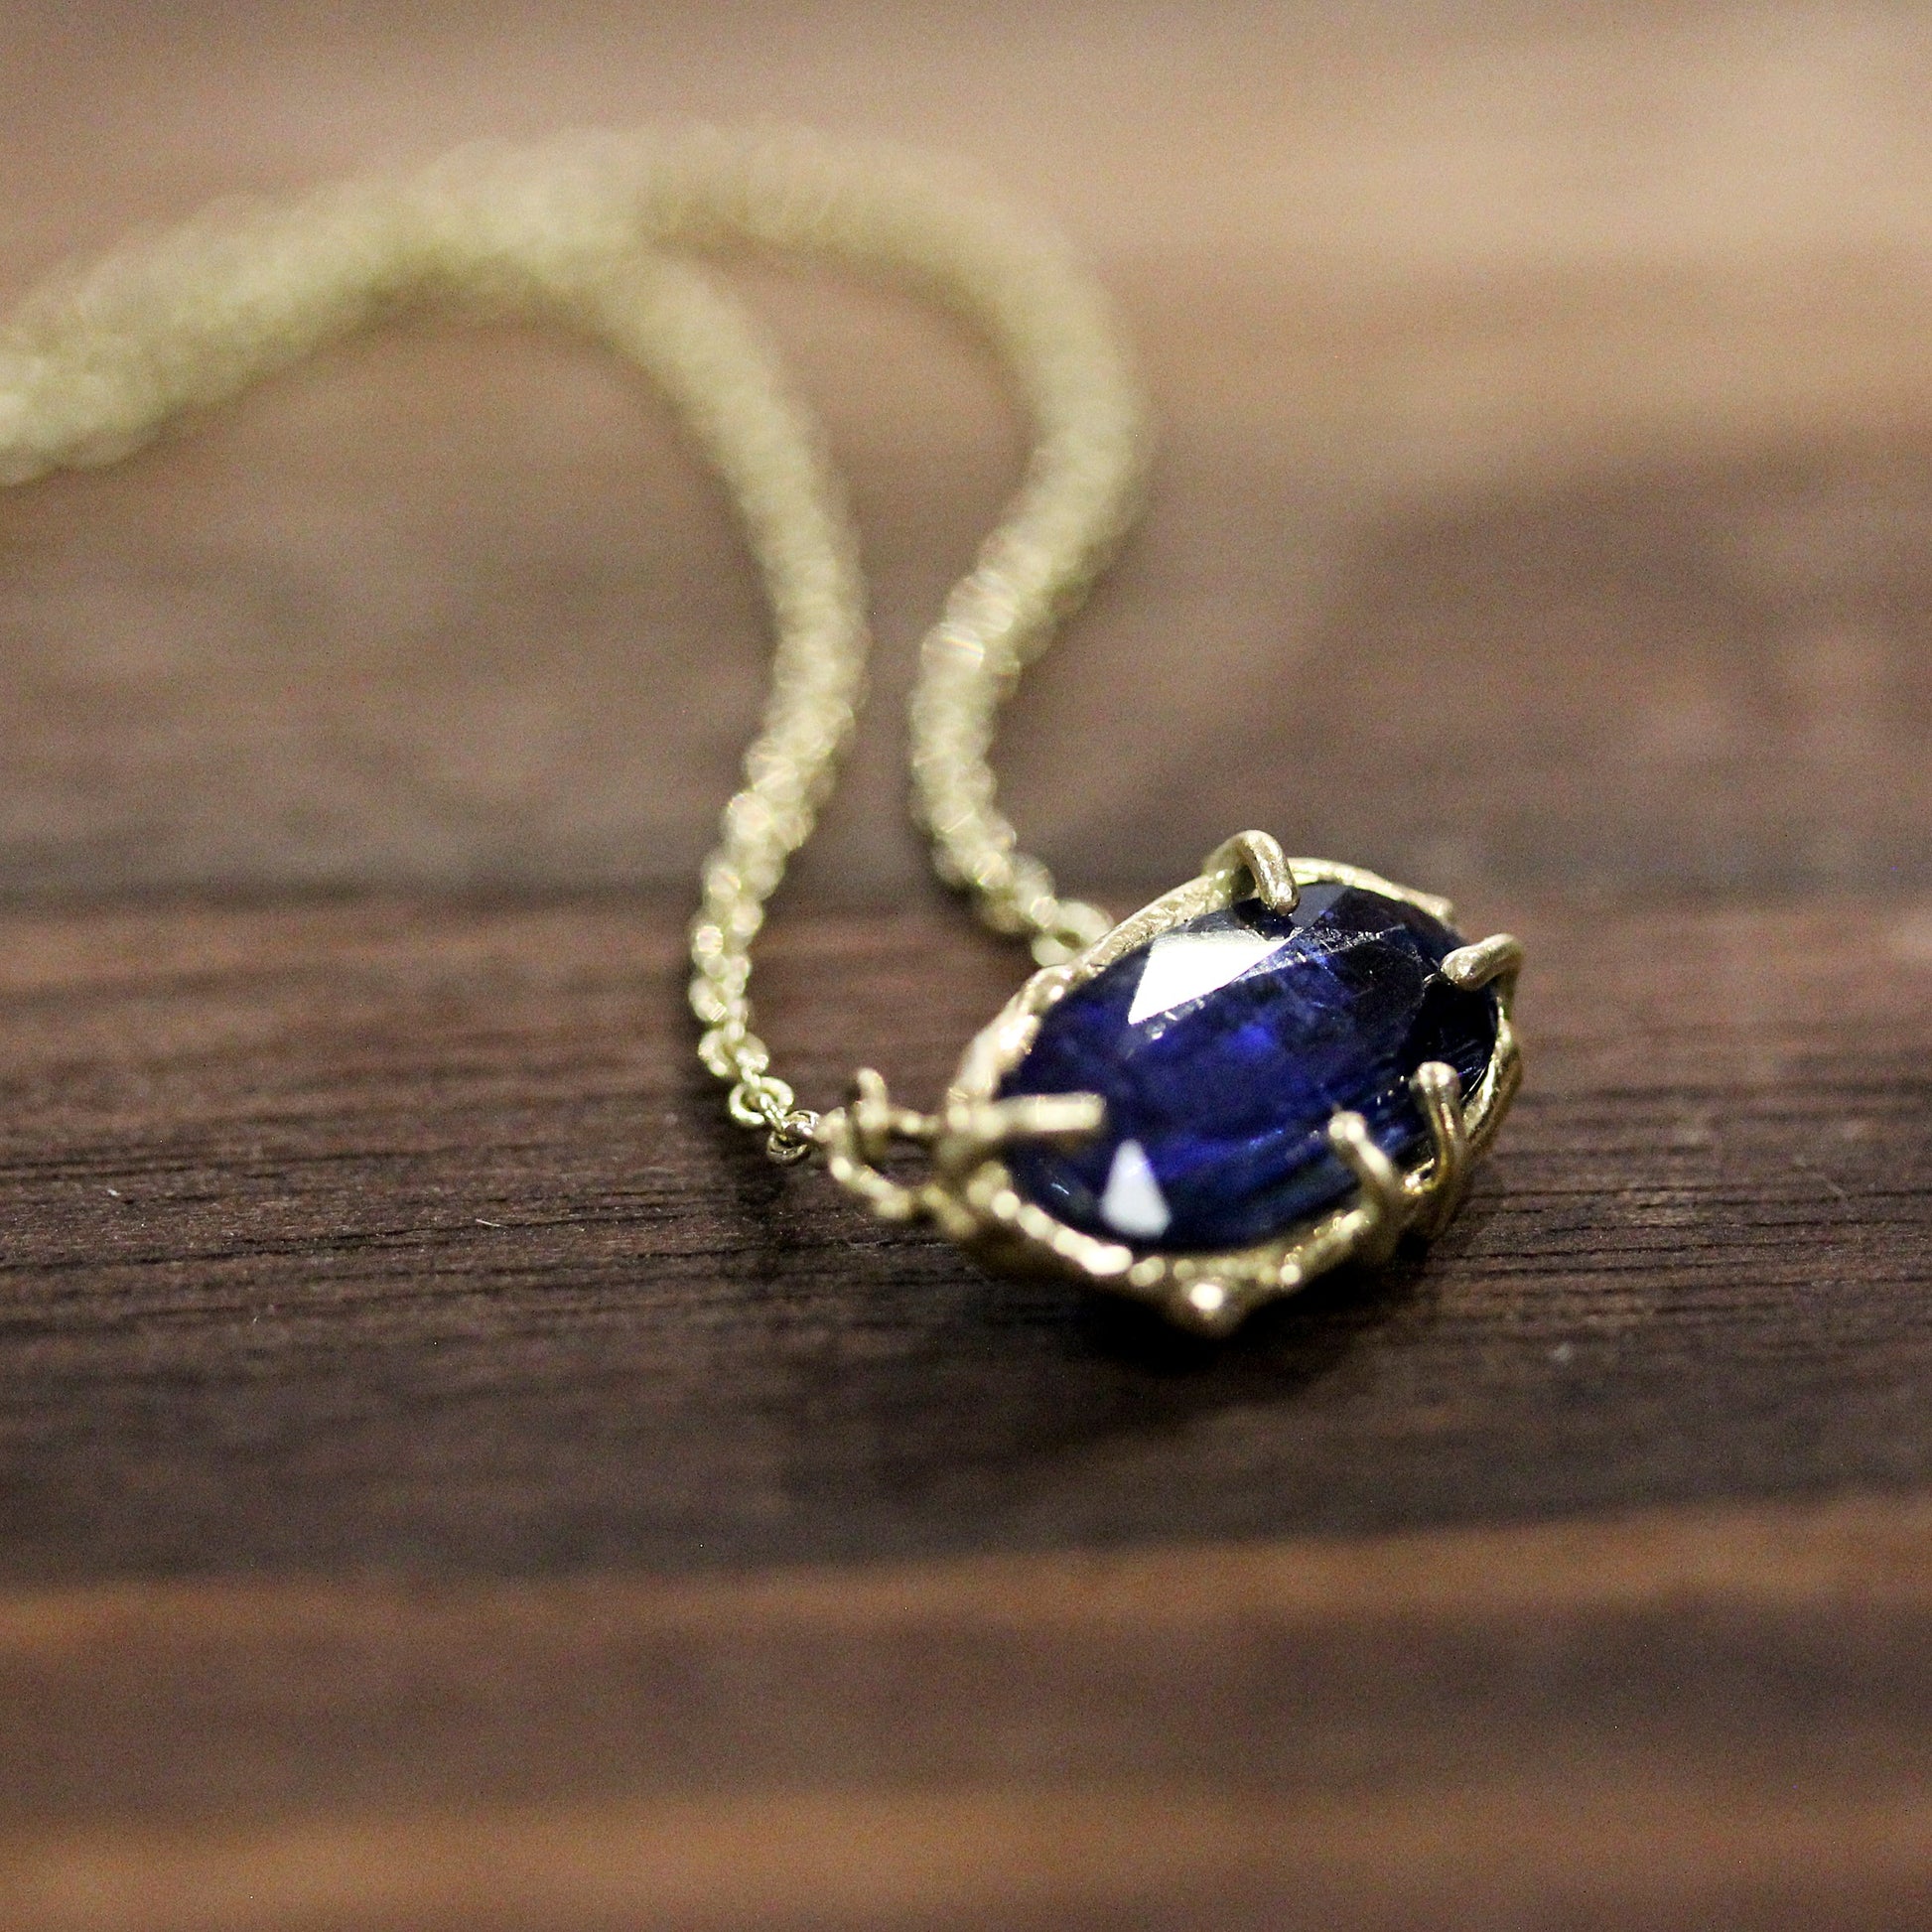 Detail shot of blue kyanite gemstone on Lark Necklace.